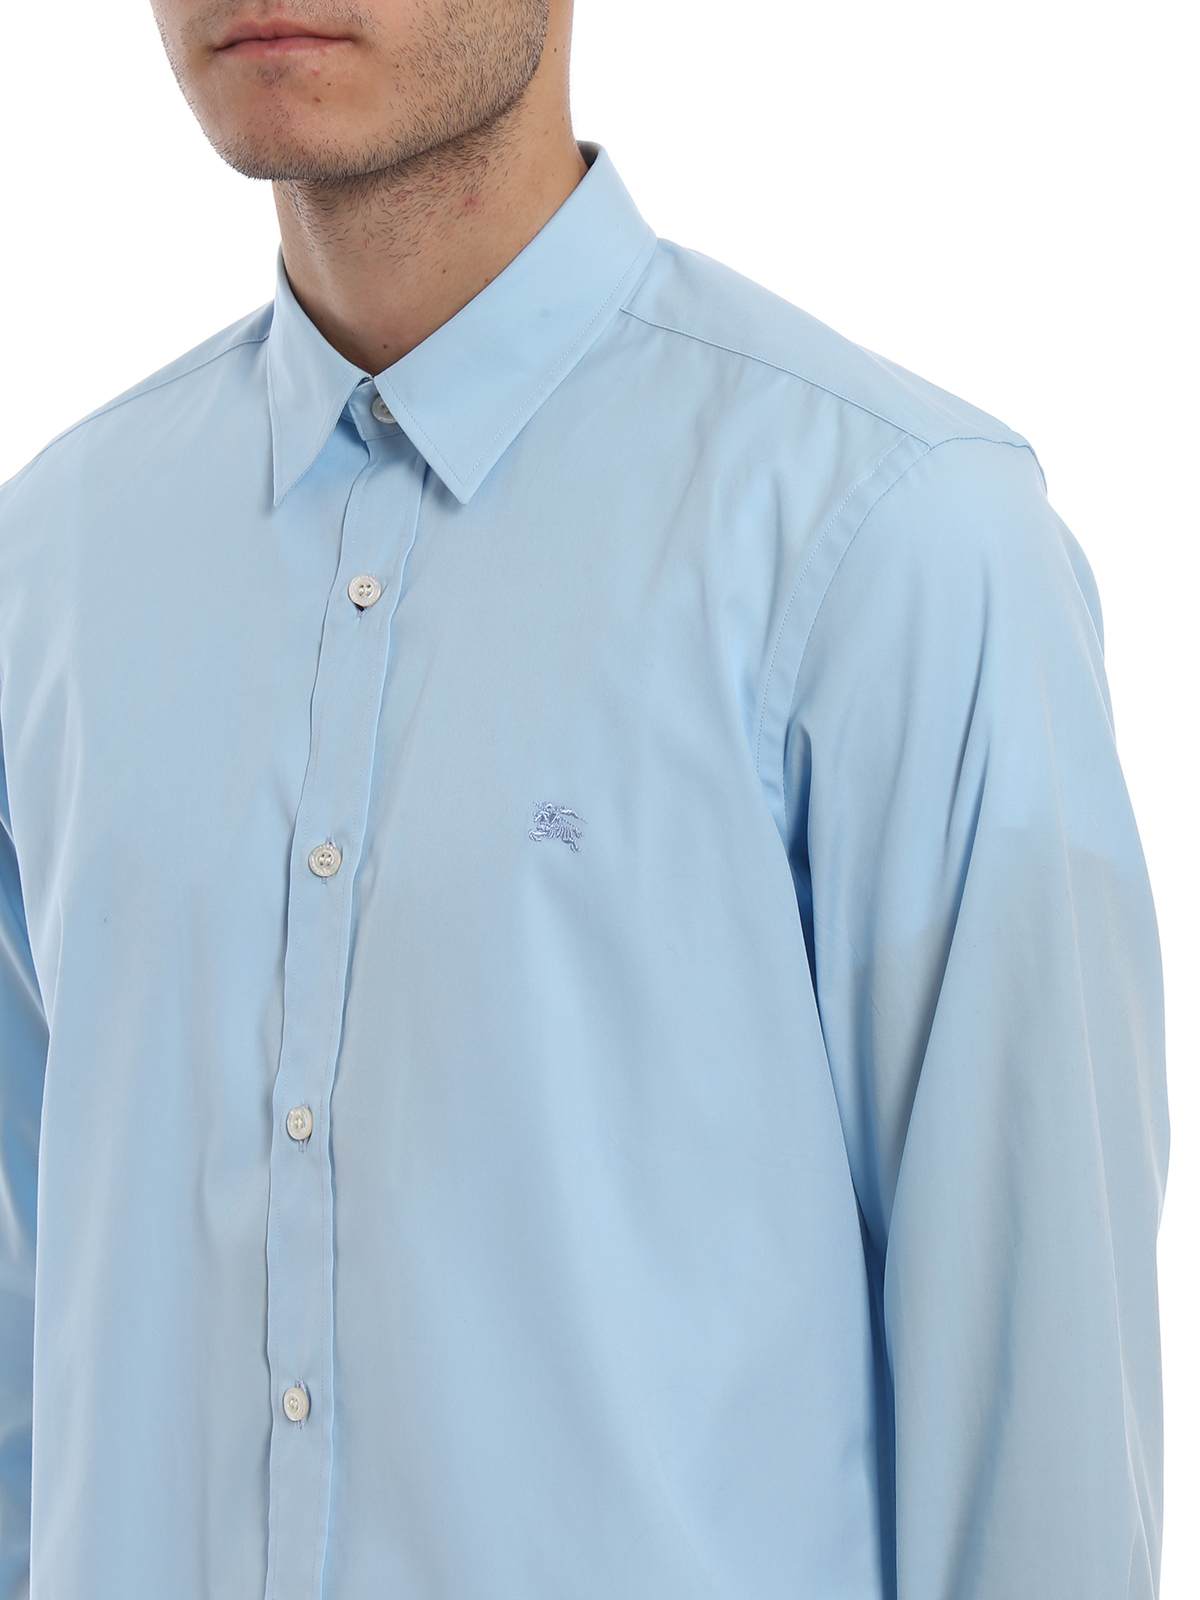 Shirts Burberry - William pale blue poplin shirt - 8003072 